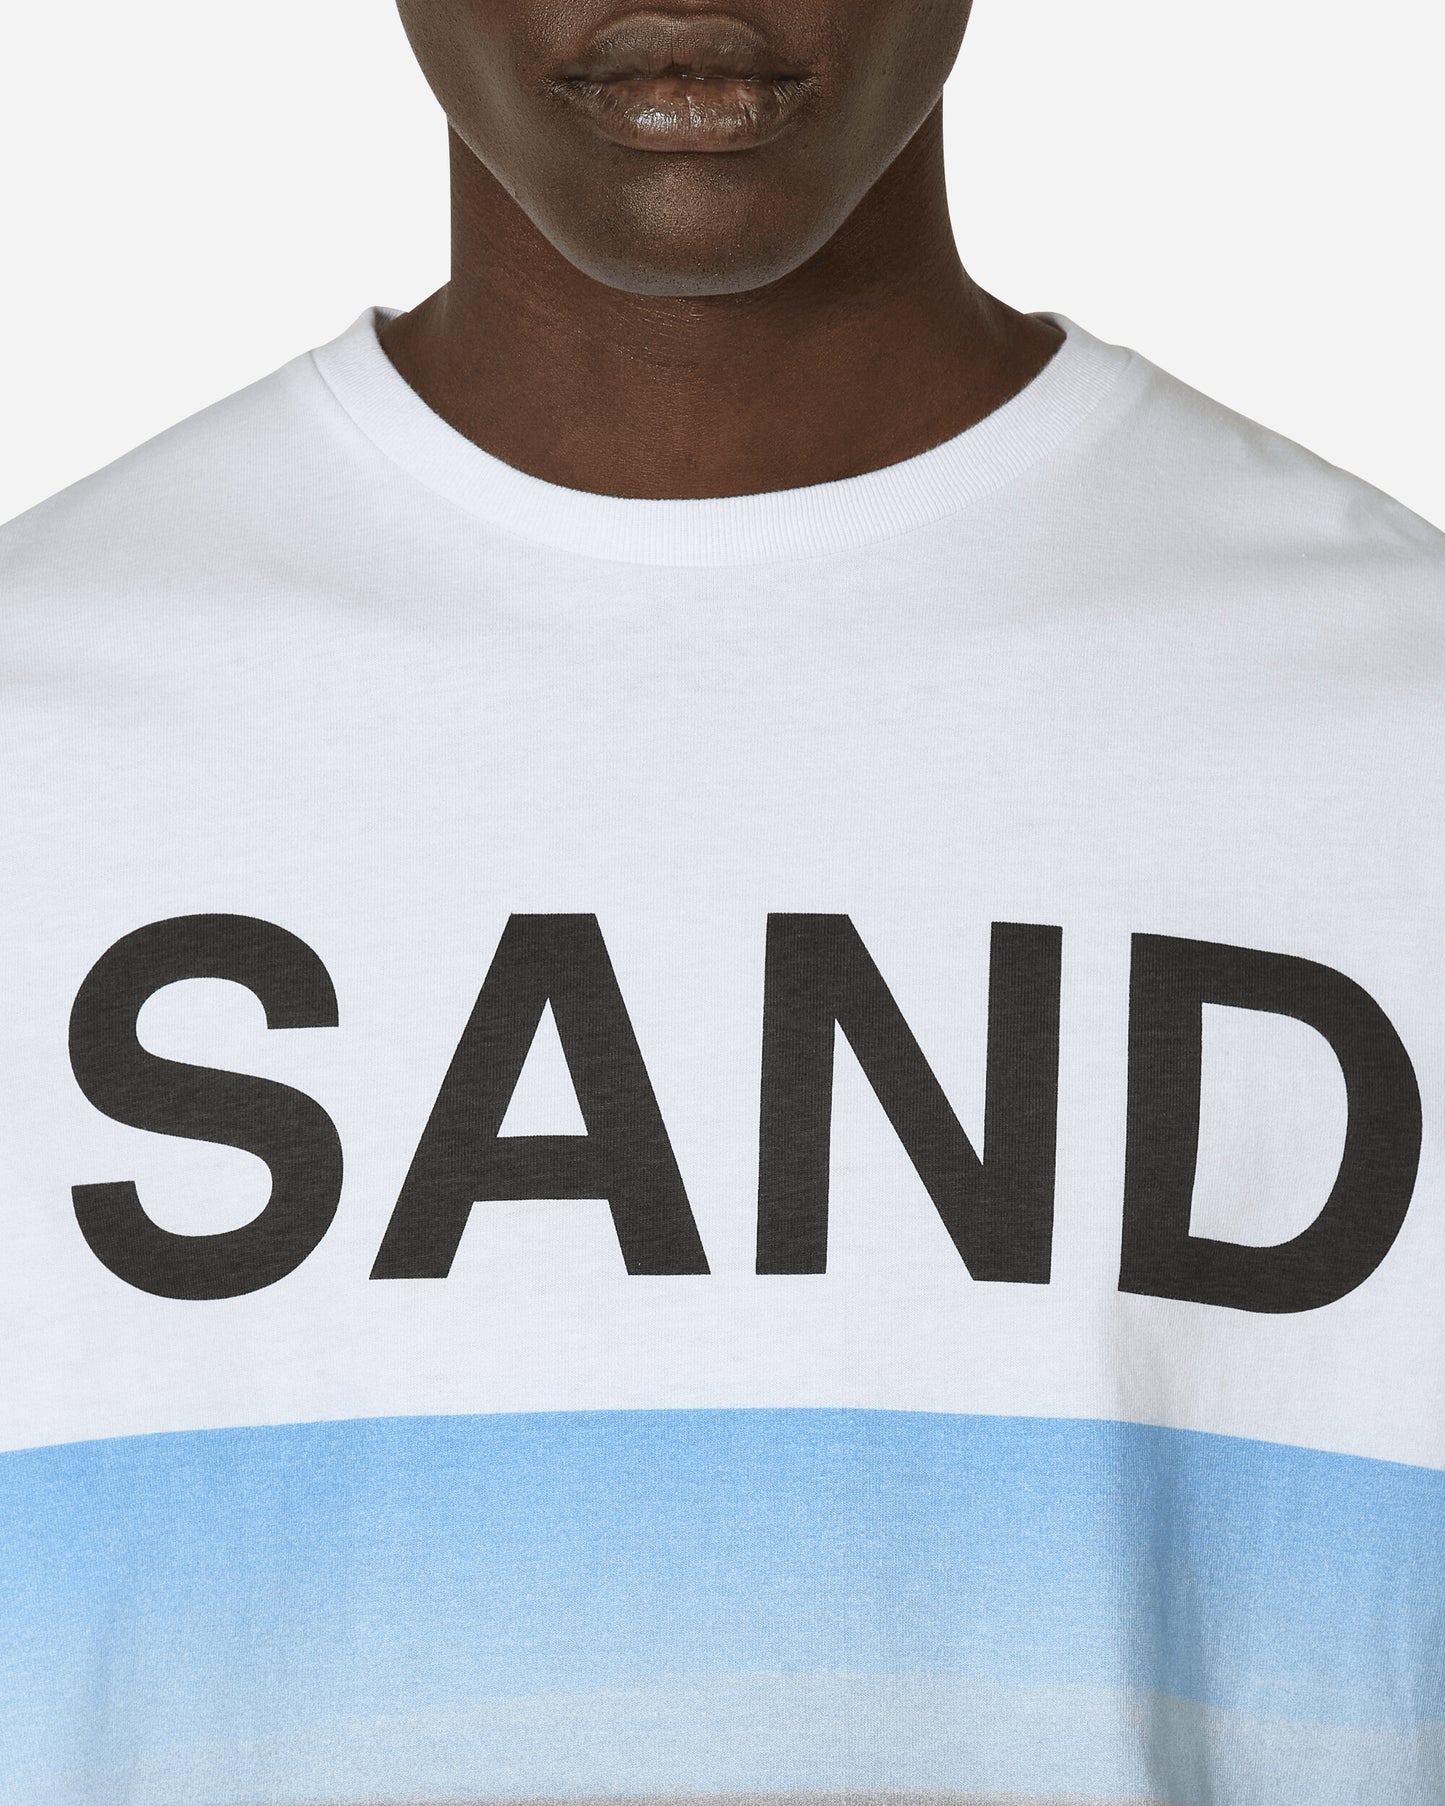 Public Possession "Sandwitch" T-Shirt White Digital Print T-Shirts Shortsleeve PPMODA24-013  1